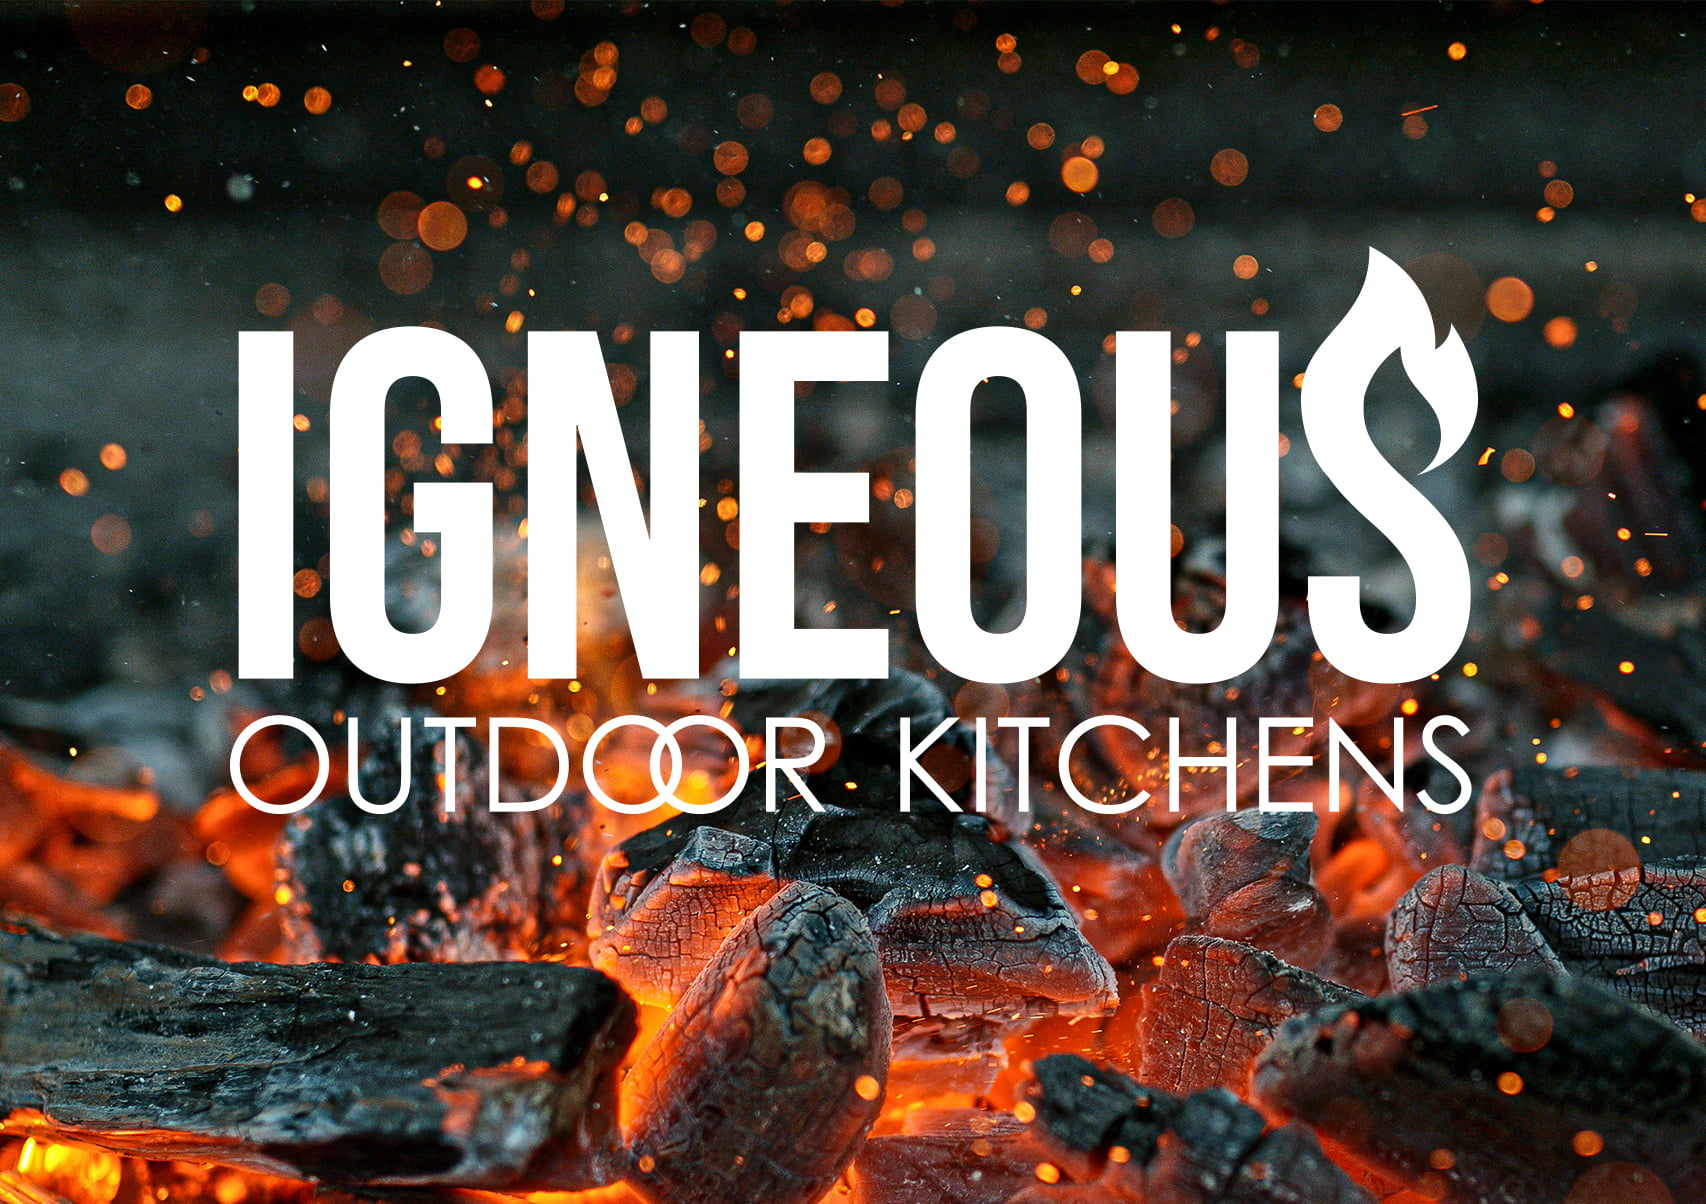 Igneous branding 1 1 - Igneous Outdoor Kitchens